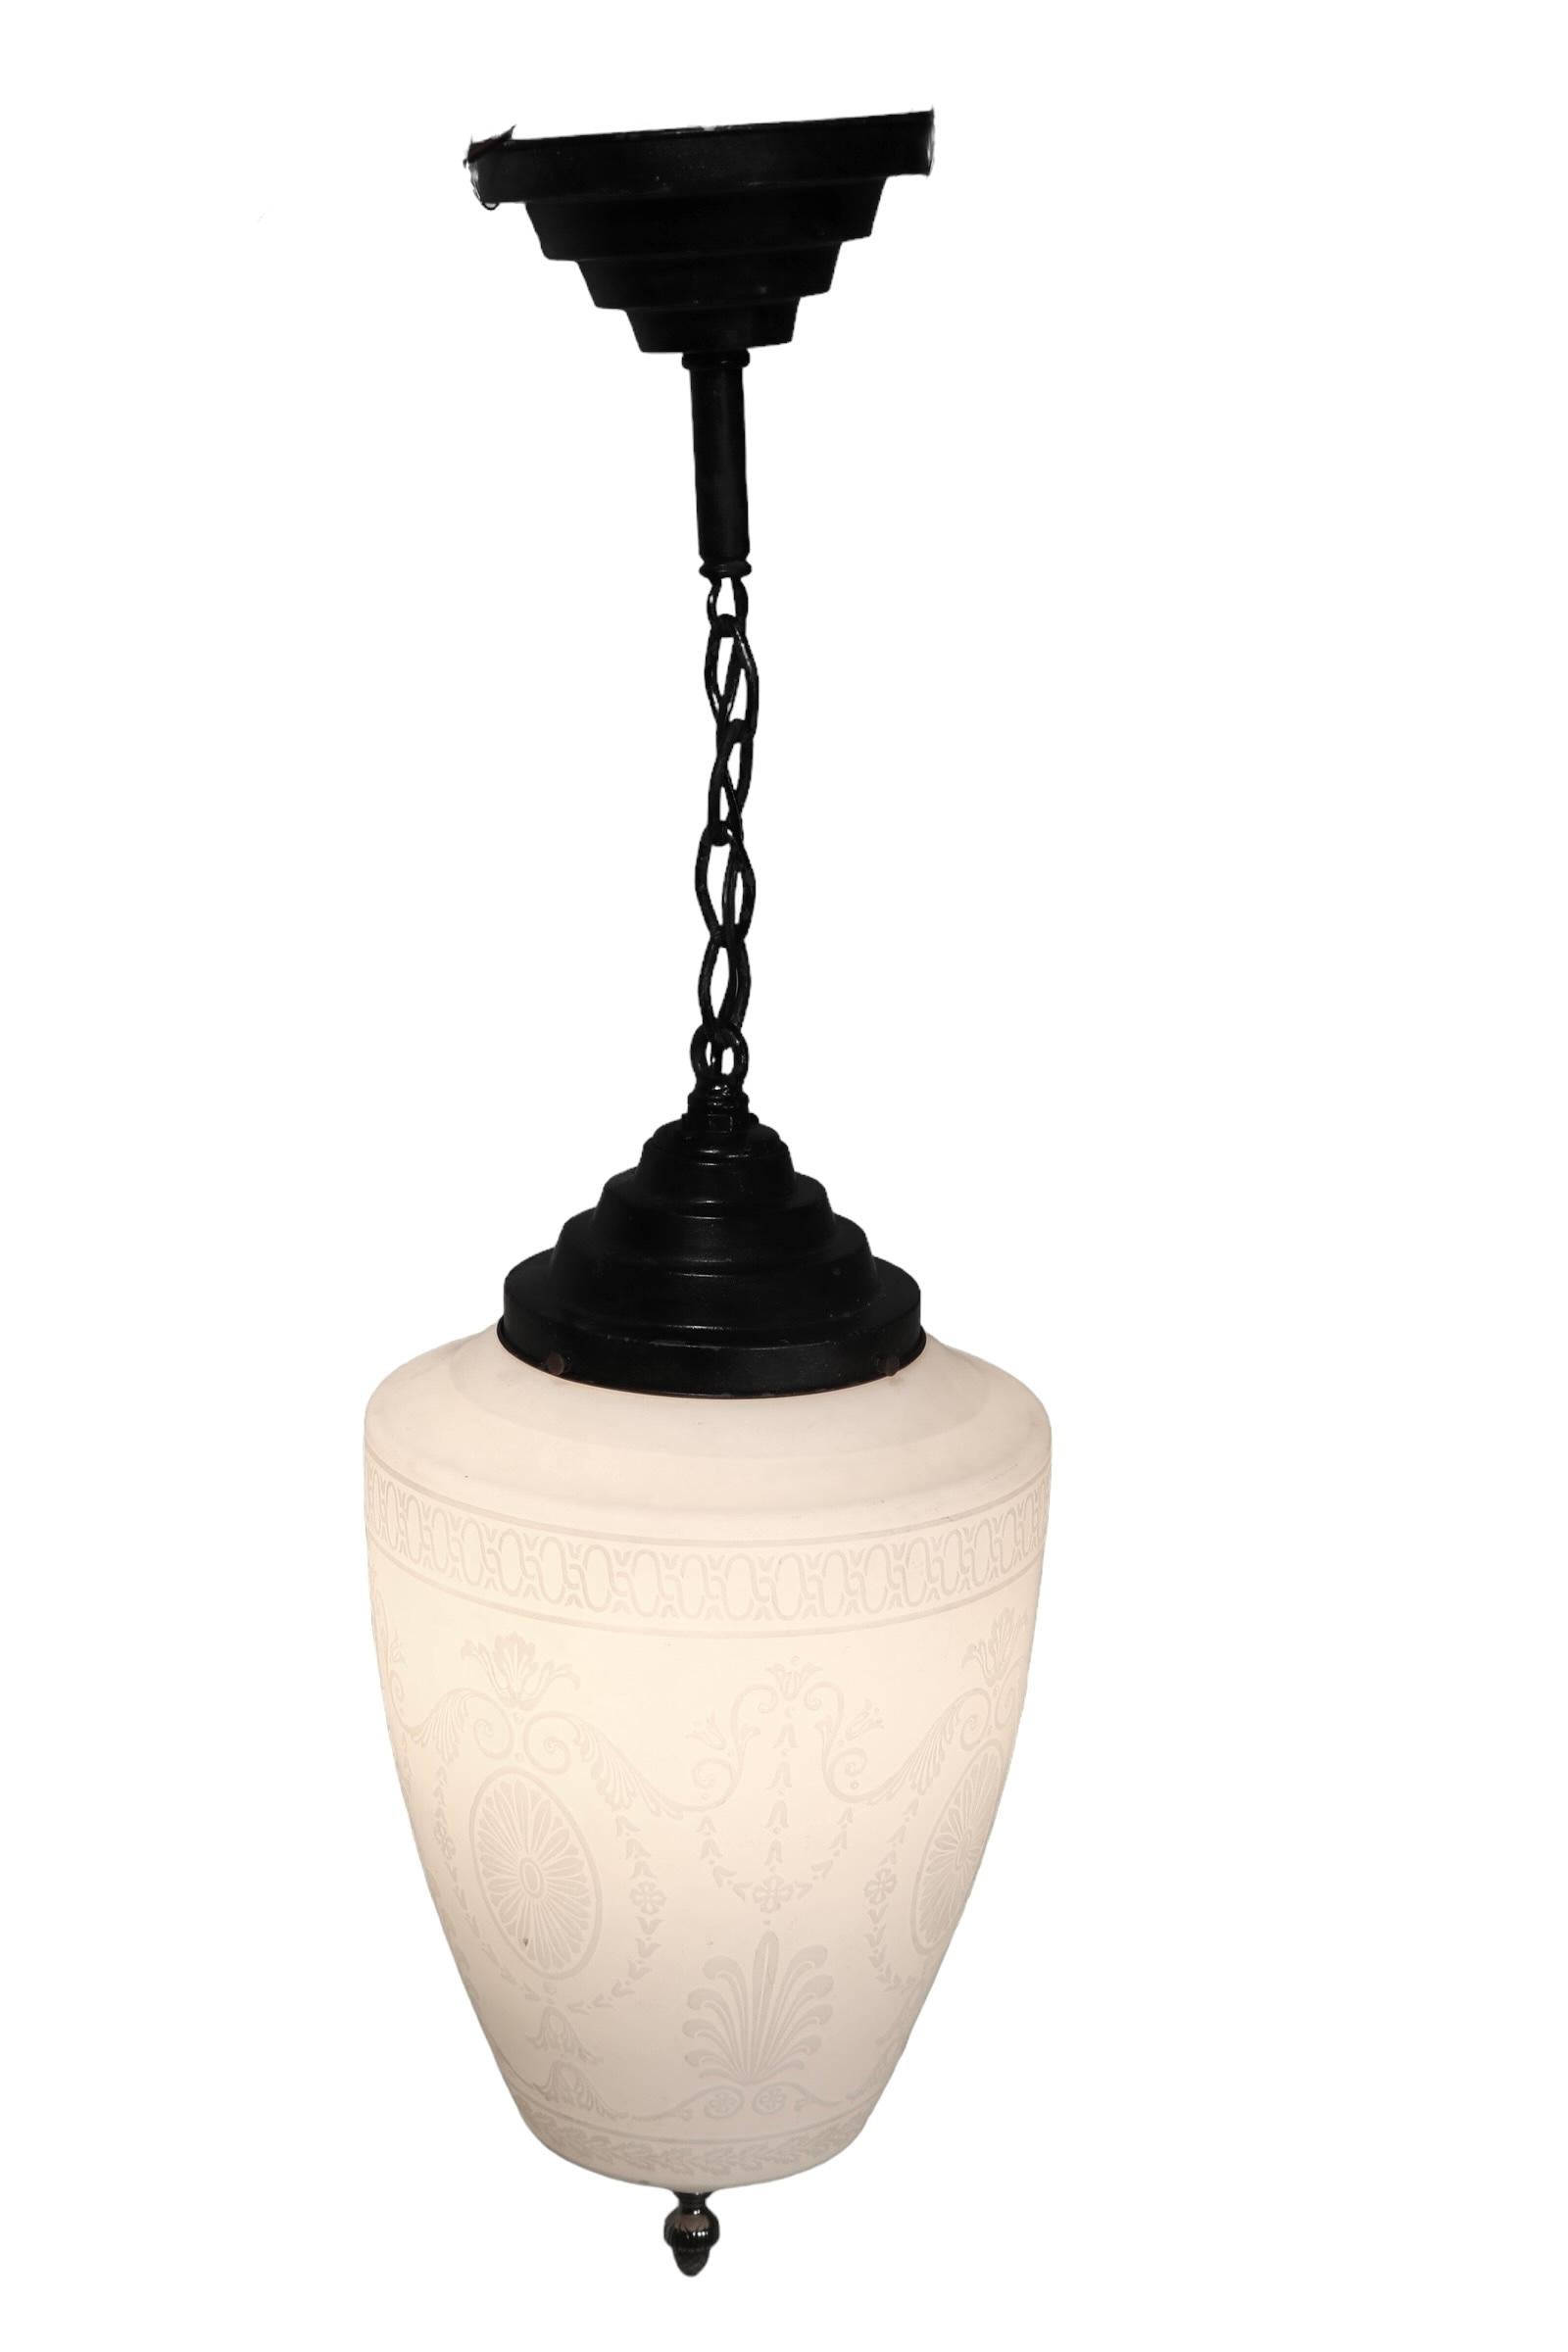 Art Deco Calcite Hanging Pendant Globe att. to Frederick Carder for Steuben  For Sale 12